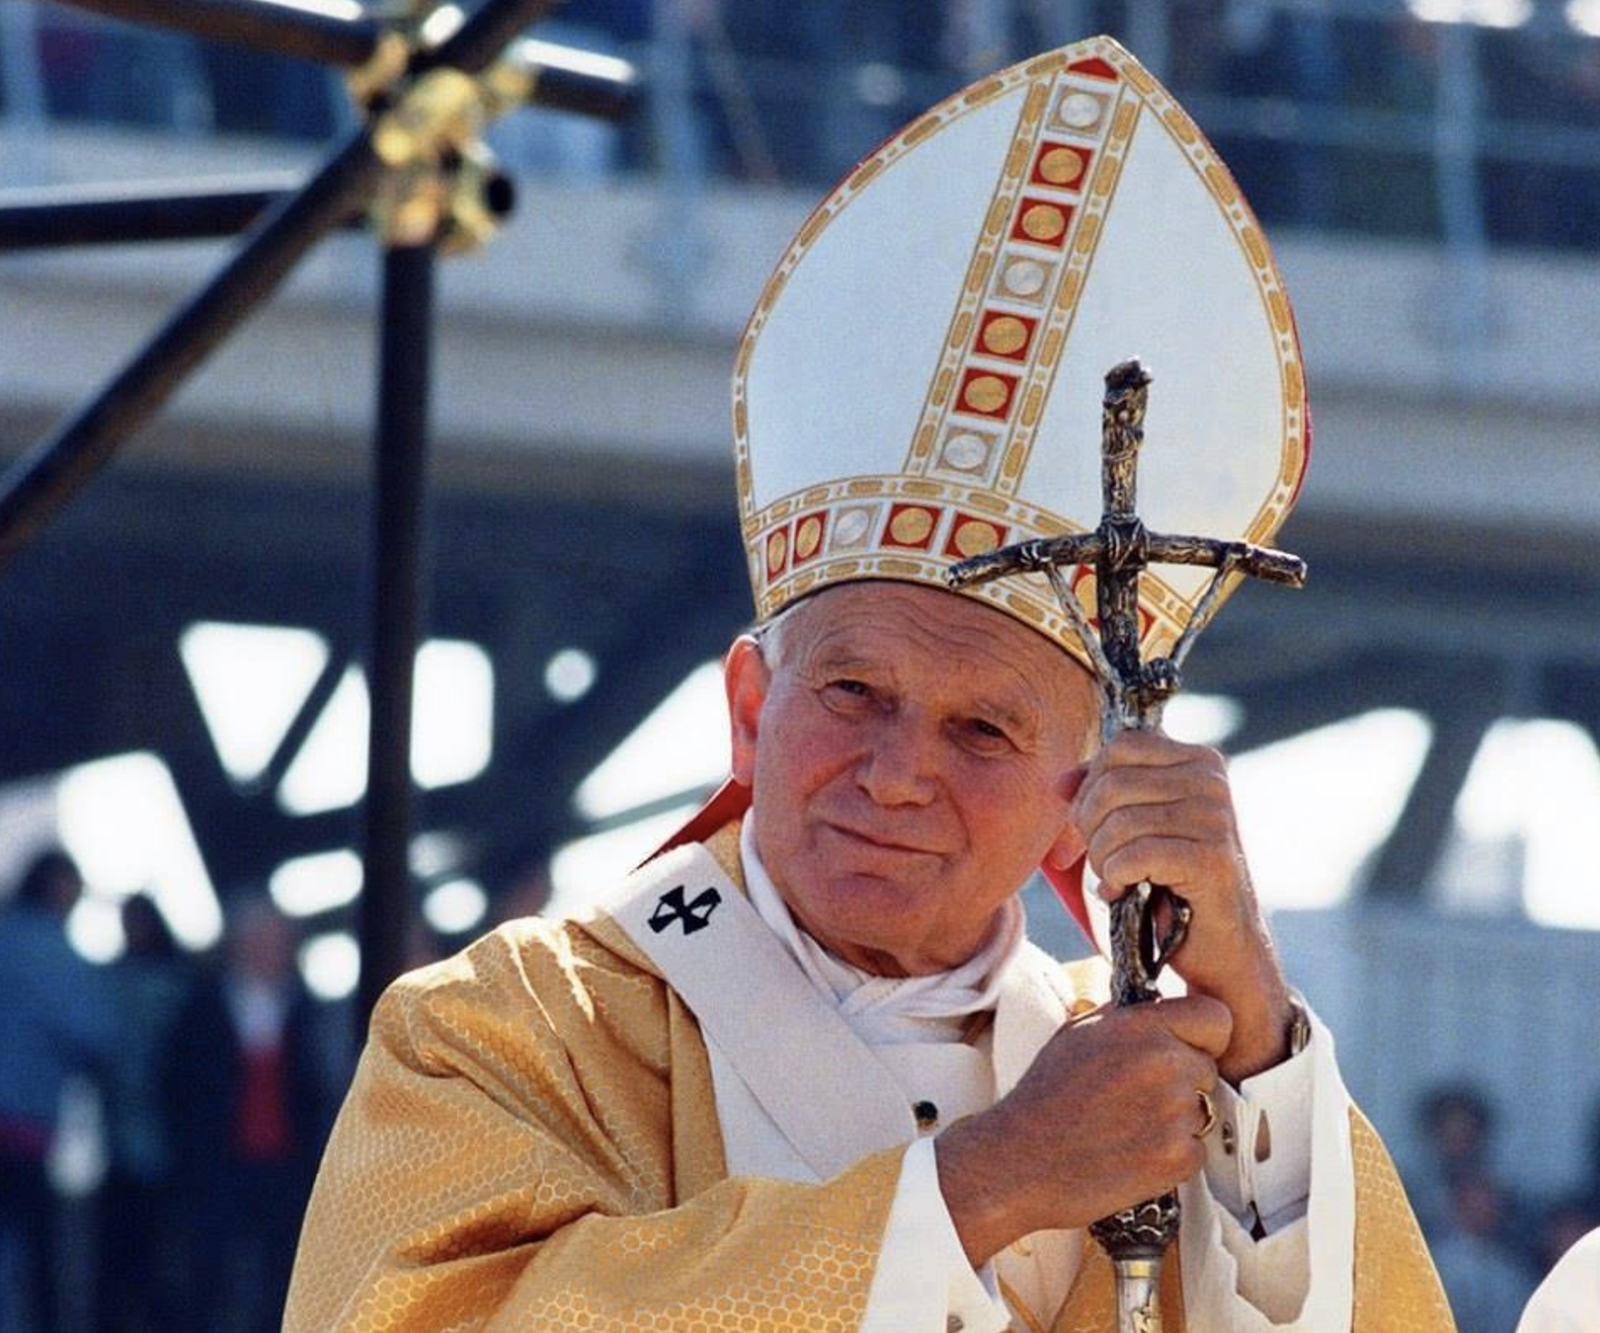 Witness To Hope: The Biography of Pope John Paul II